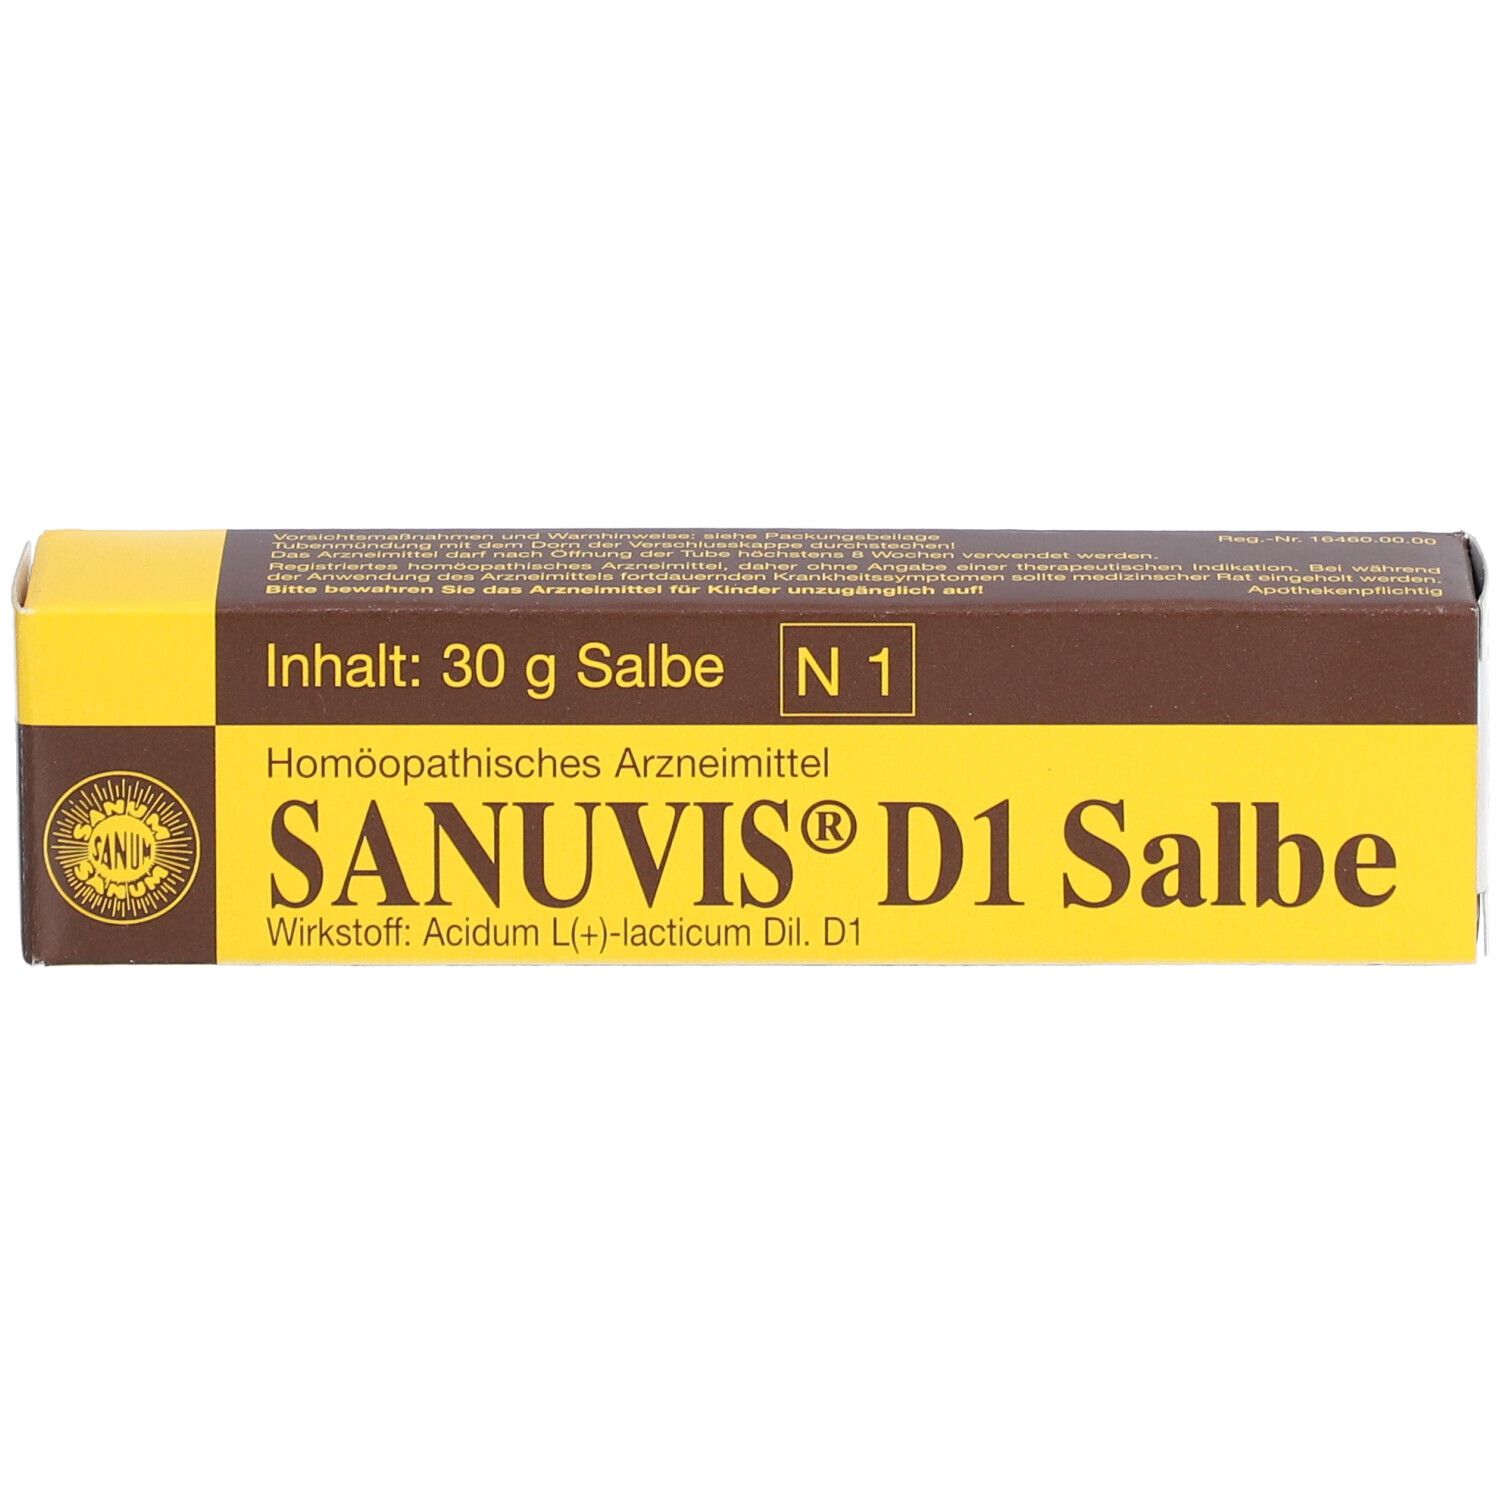 Sanuvis® D1 Salbe